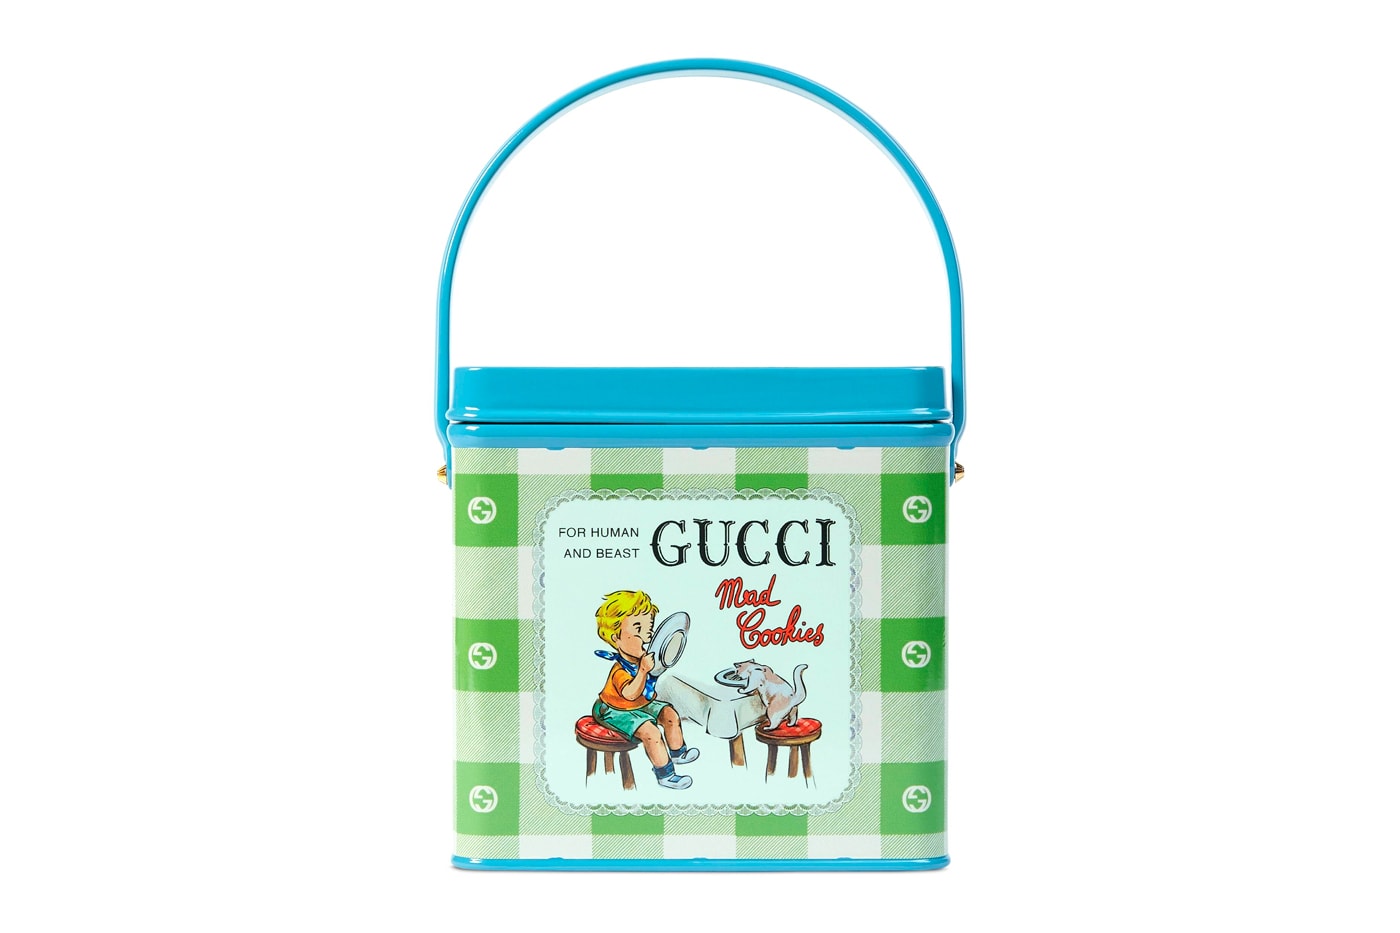 Gucci Mad Cookies Top Handle Handbag